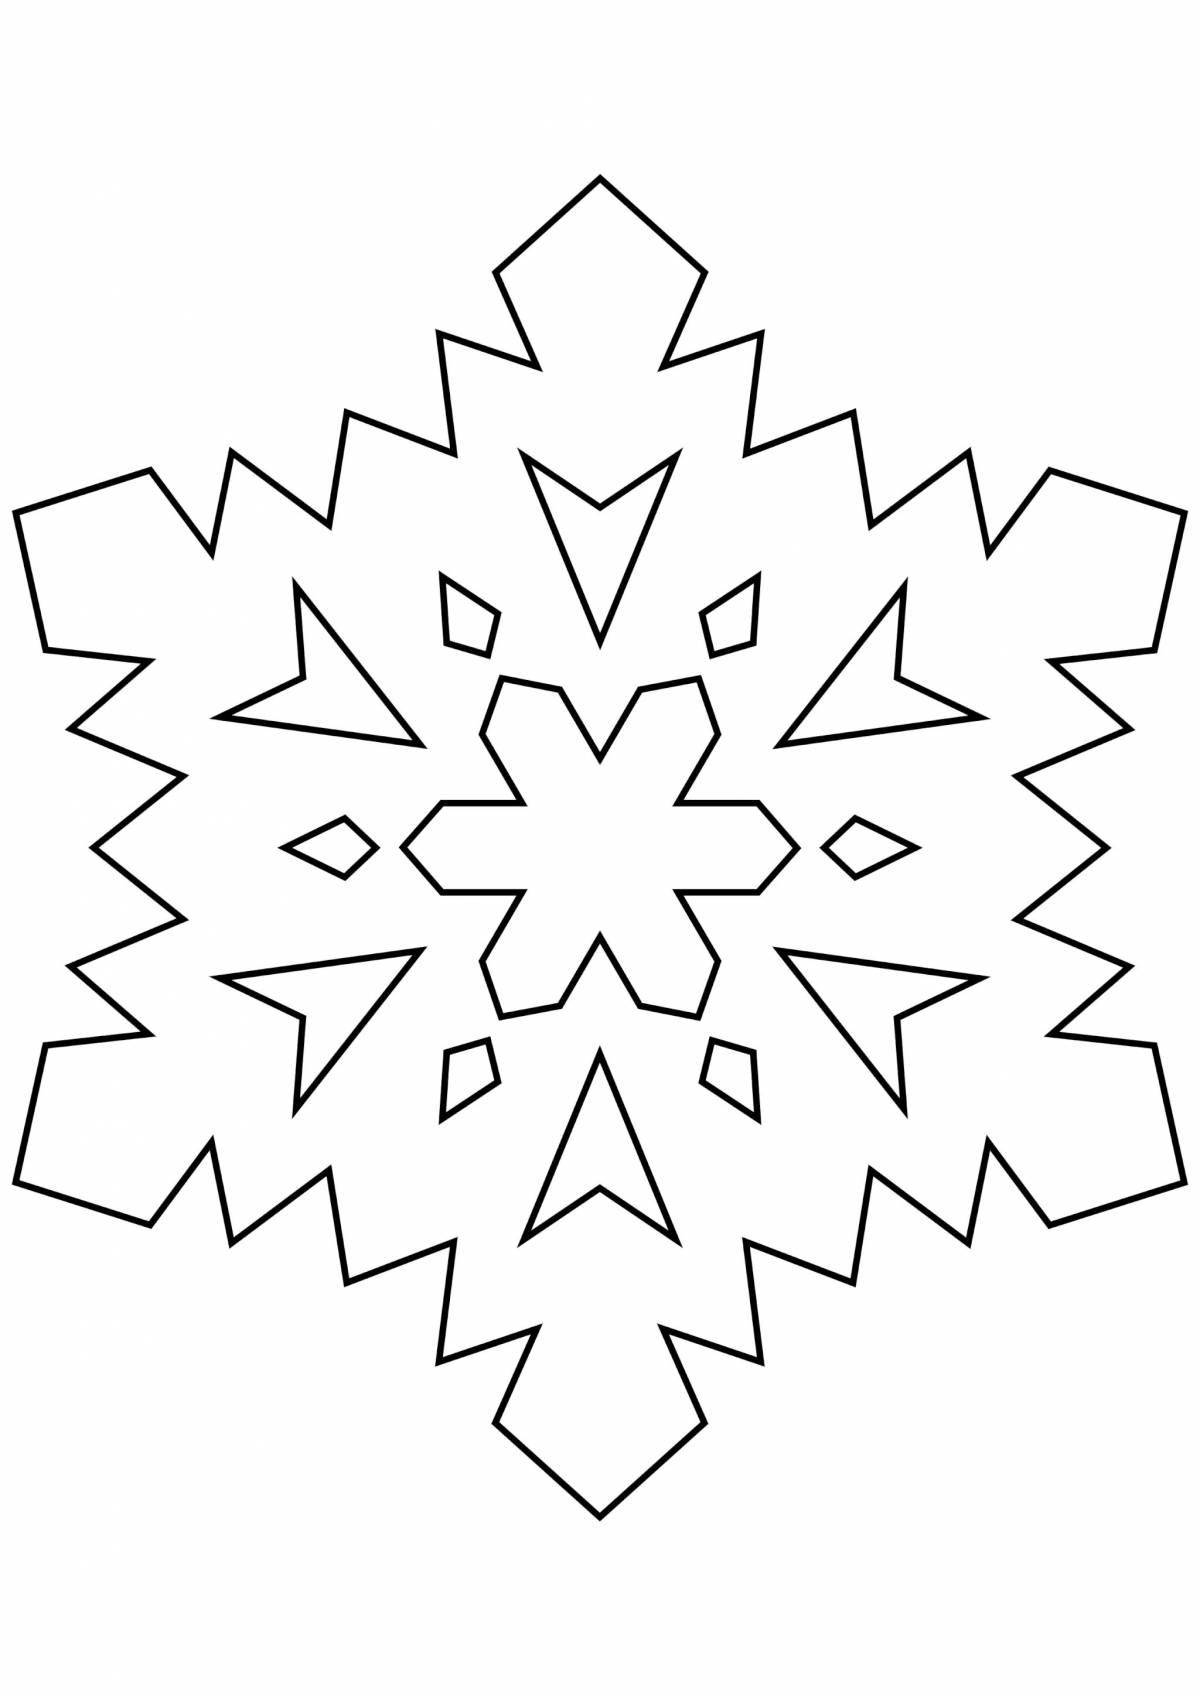 Shiny snowflake coloring page